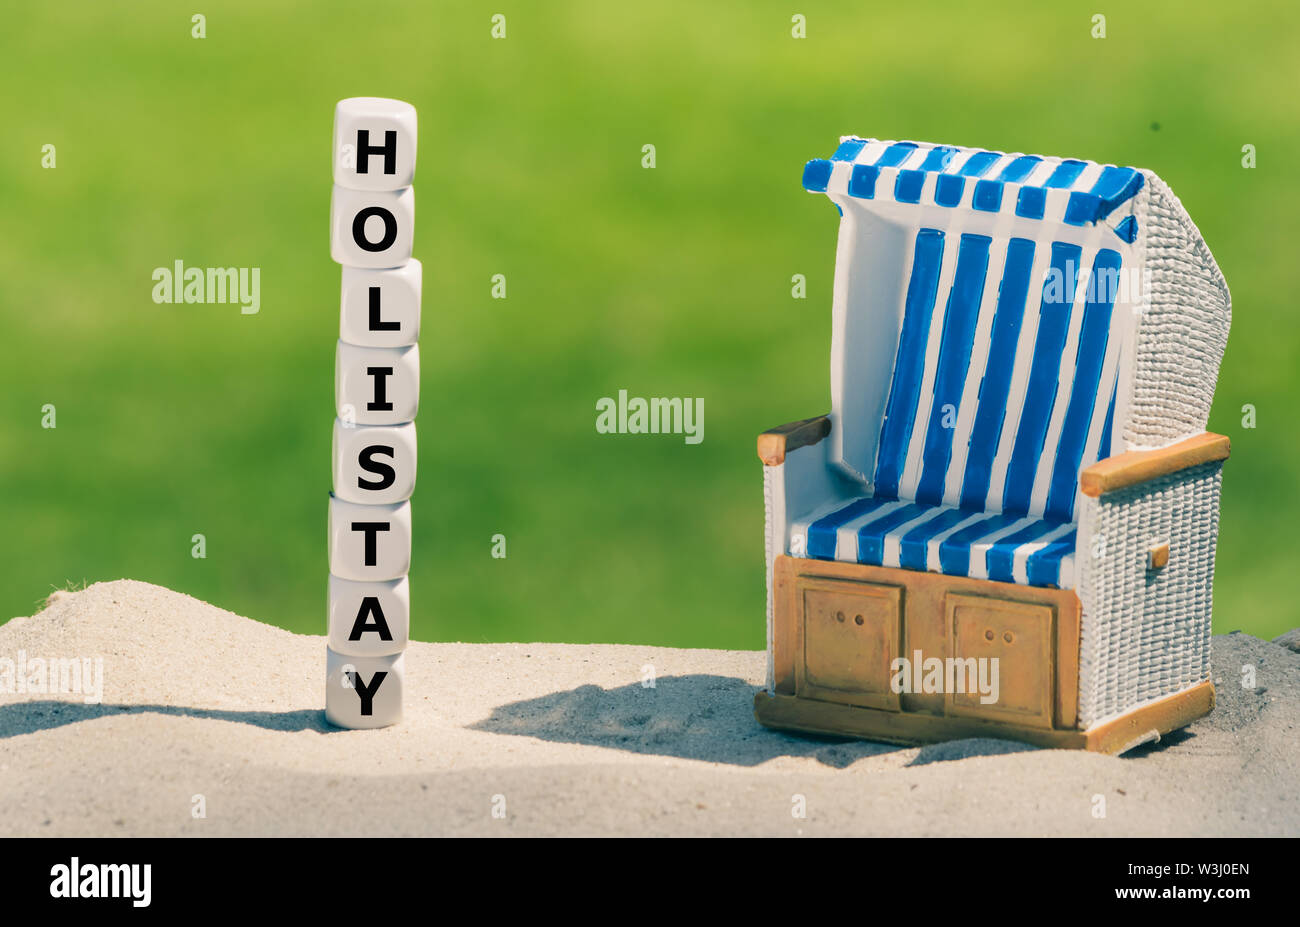 Vacanza a casa. Dadi forma la parola 'holistay' accanto a una sdraio sulla spiaggia. Foto Stock